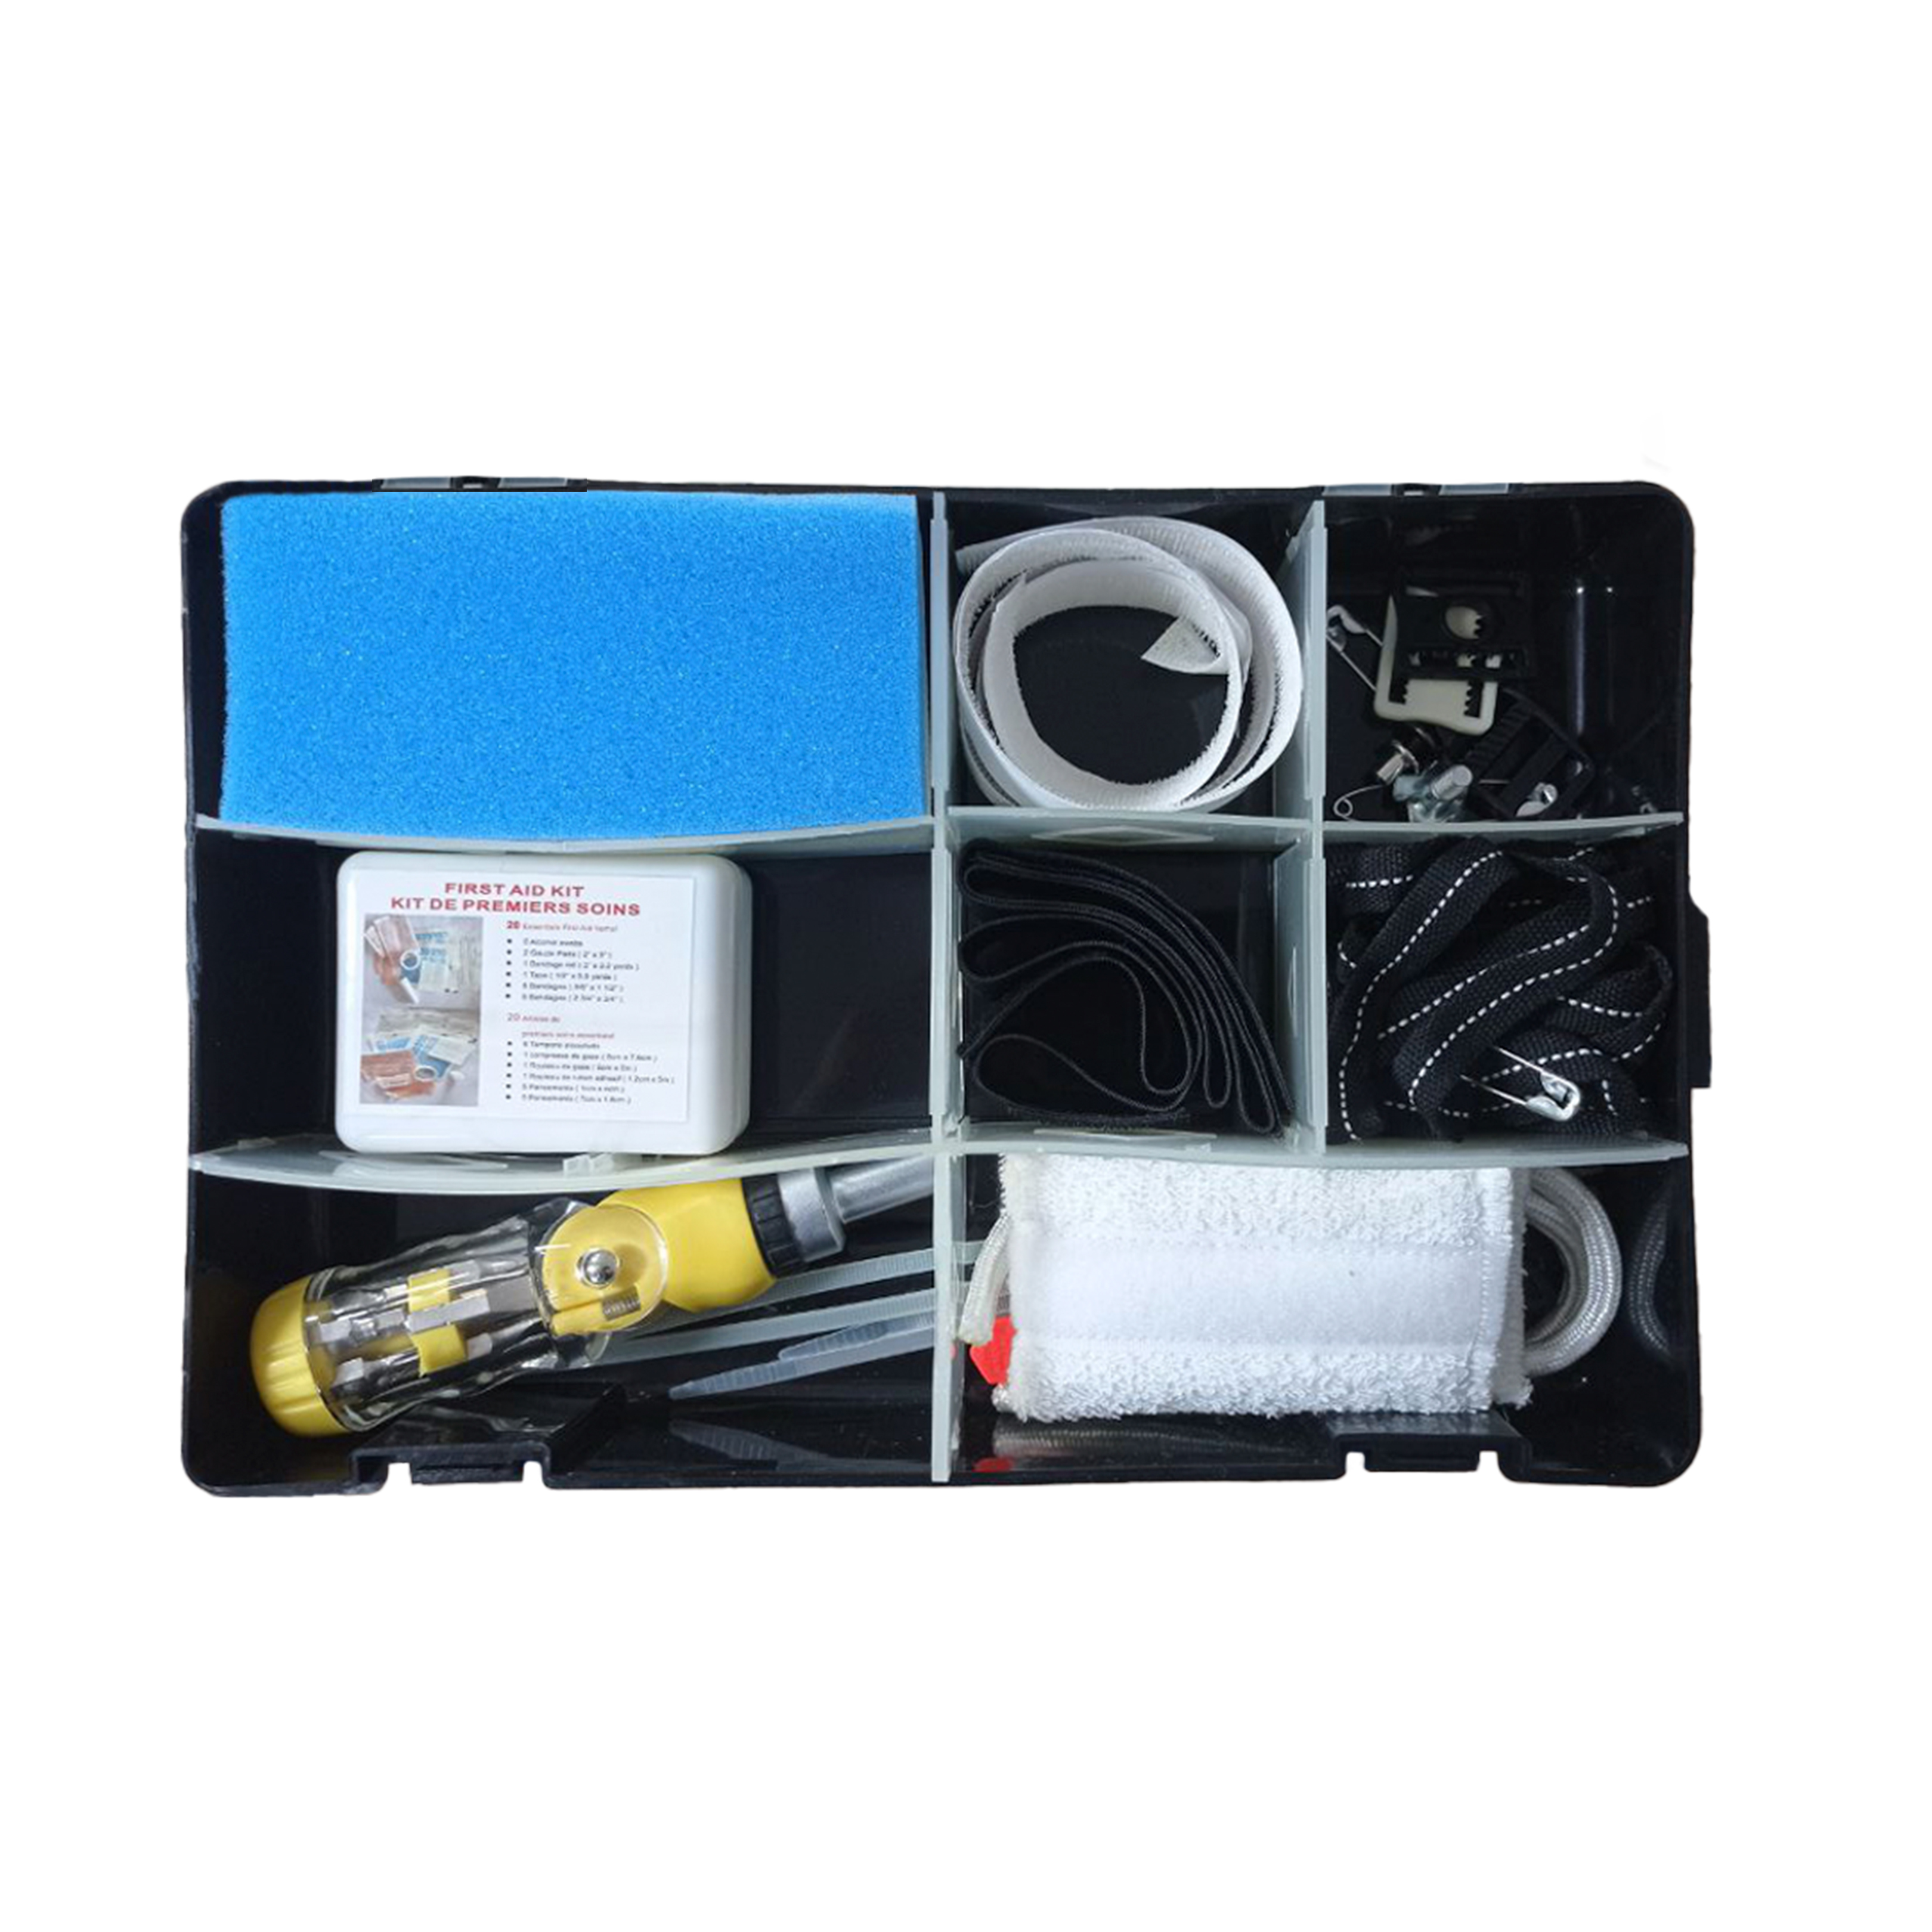 Ремкомплект BlueSports Goalie Repair Kit